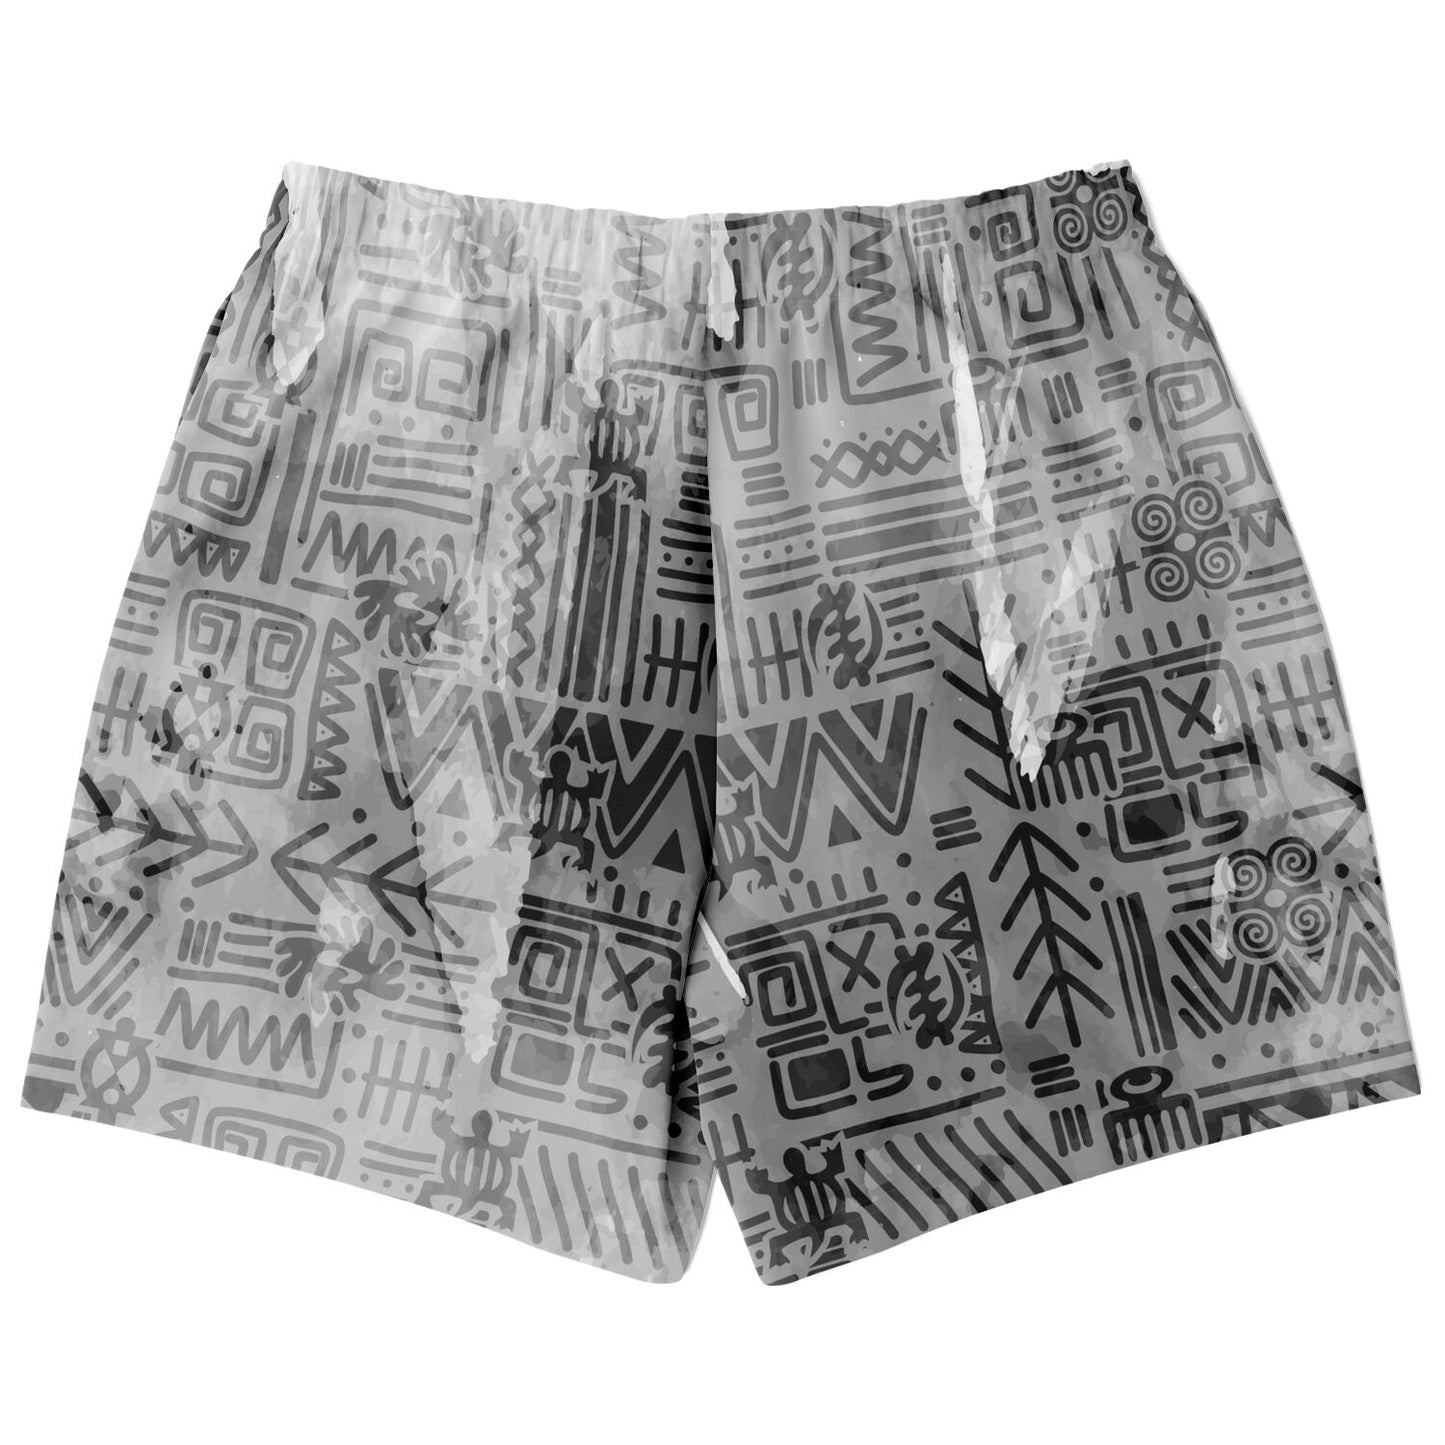 Tribal Adinkra Urban African shorts